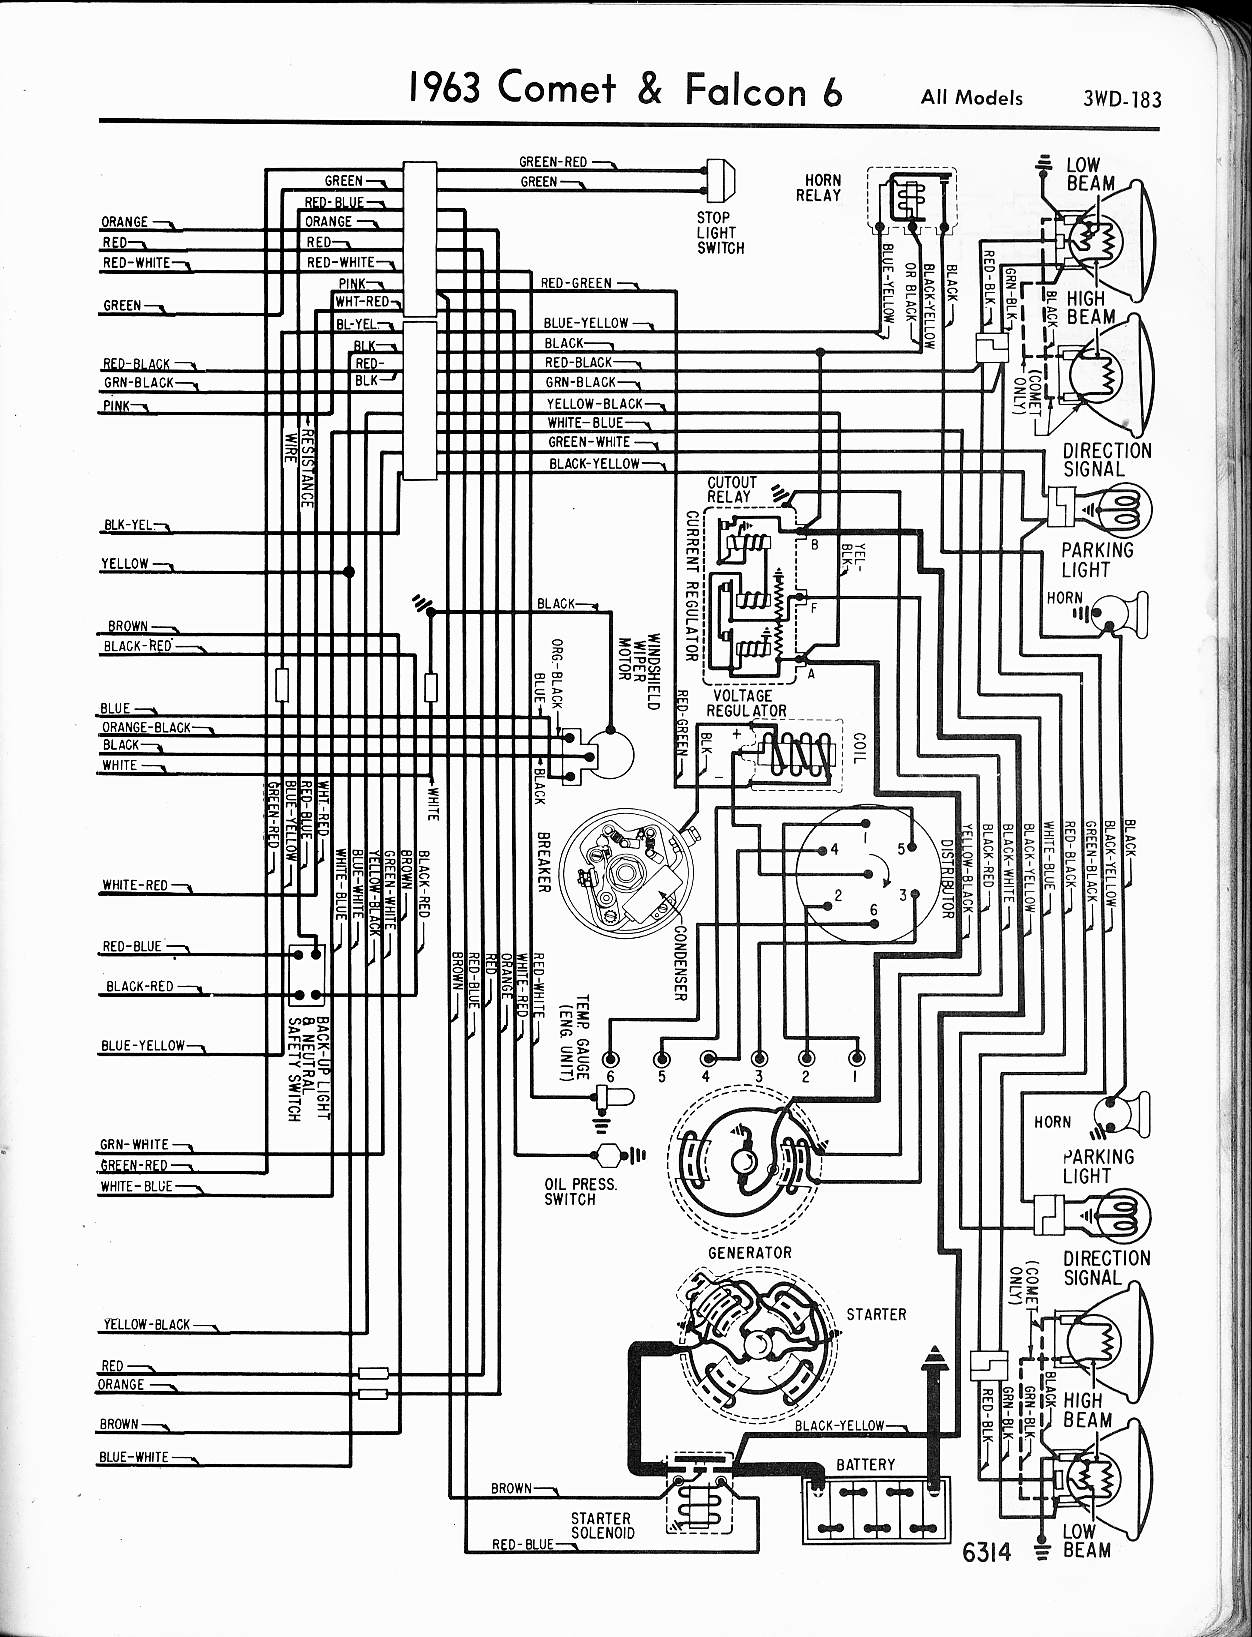 1963 Ford falcon ranchero wiring diagram